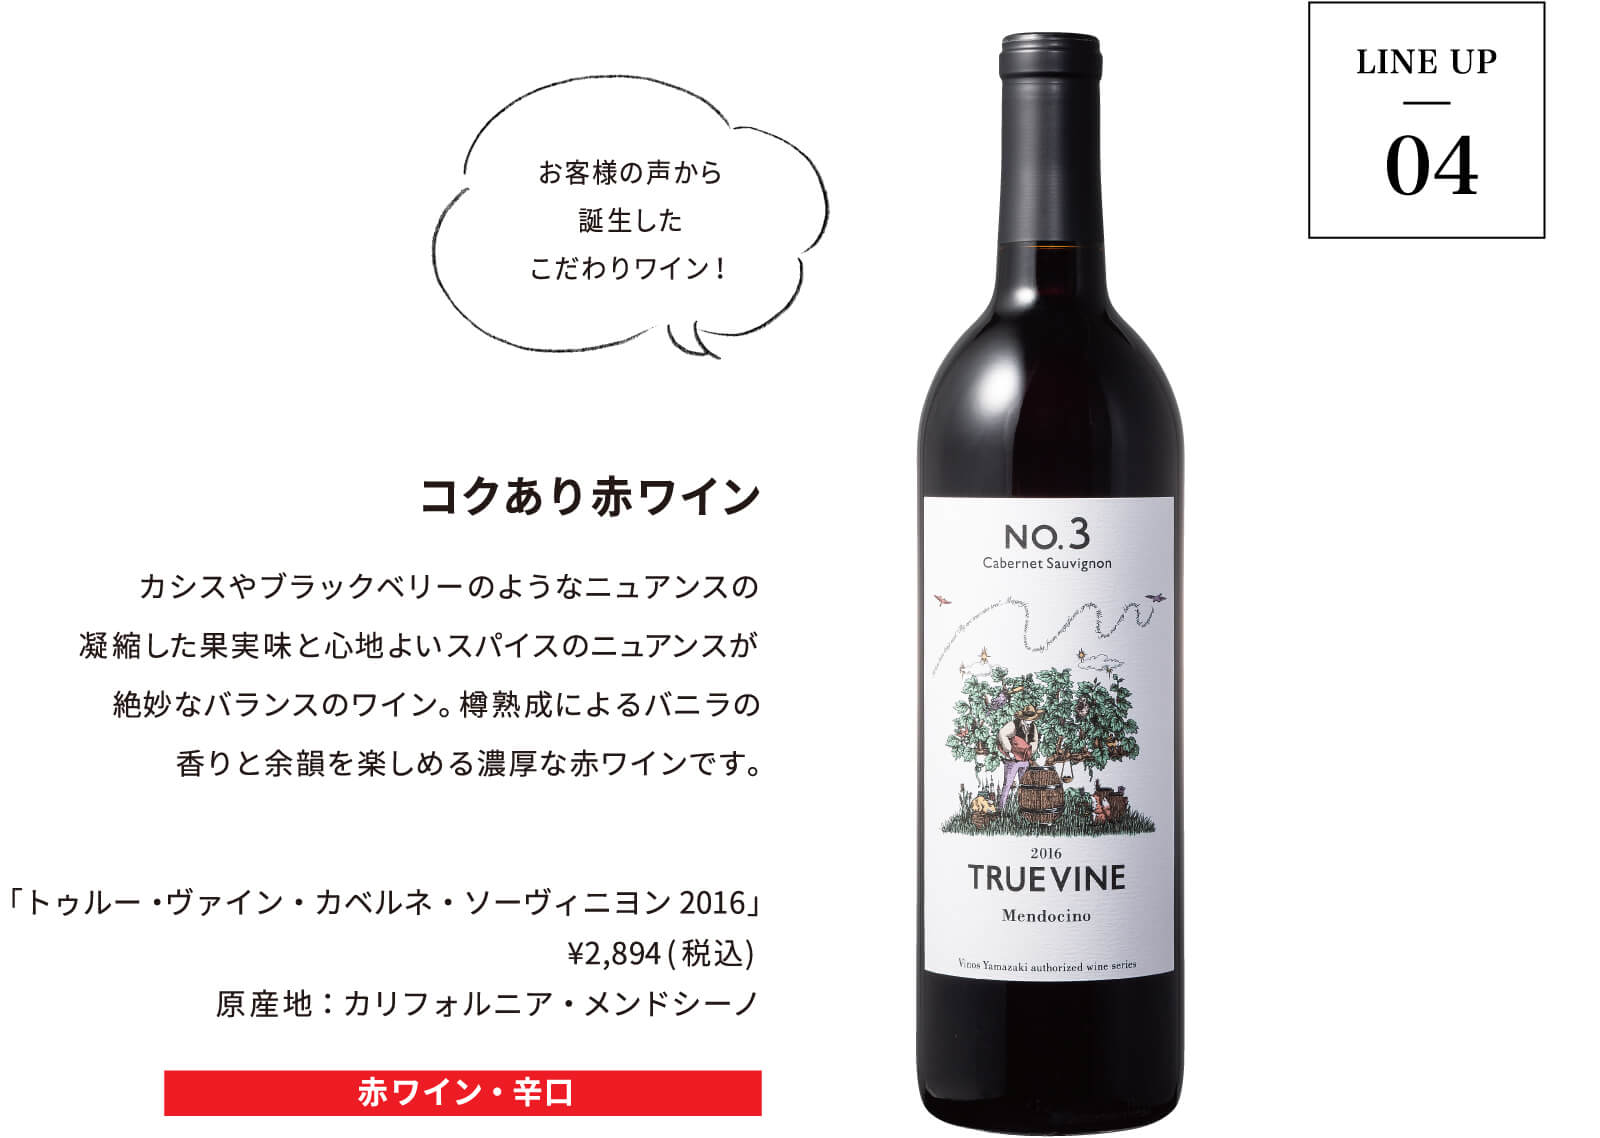 LINE UP04｜コクあり赤ワイン｜カシスやブラックベリーのようなニュアンスの
			凝縮した果実味と心地よいスパイスのニュアンスが絶妙なバランスのワイン。樽熟成によるバニラの香りと余韻を楽しめる濃厚な赤ワインです。「トゥルー・ヴァイン・カベルネ・ソーヴィニヨン2016」 ¥2,894(税込) 原産地：カリフォルニア・メンドシーノ